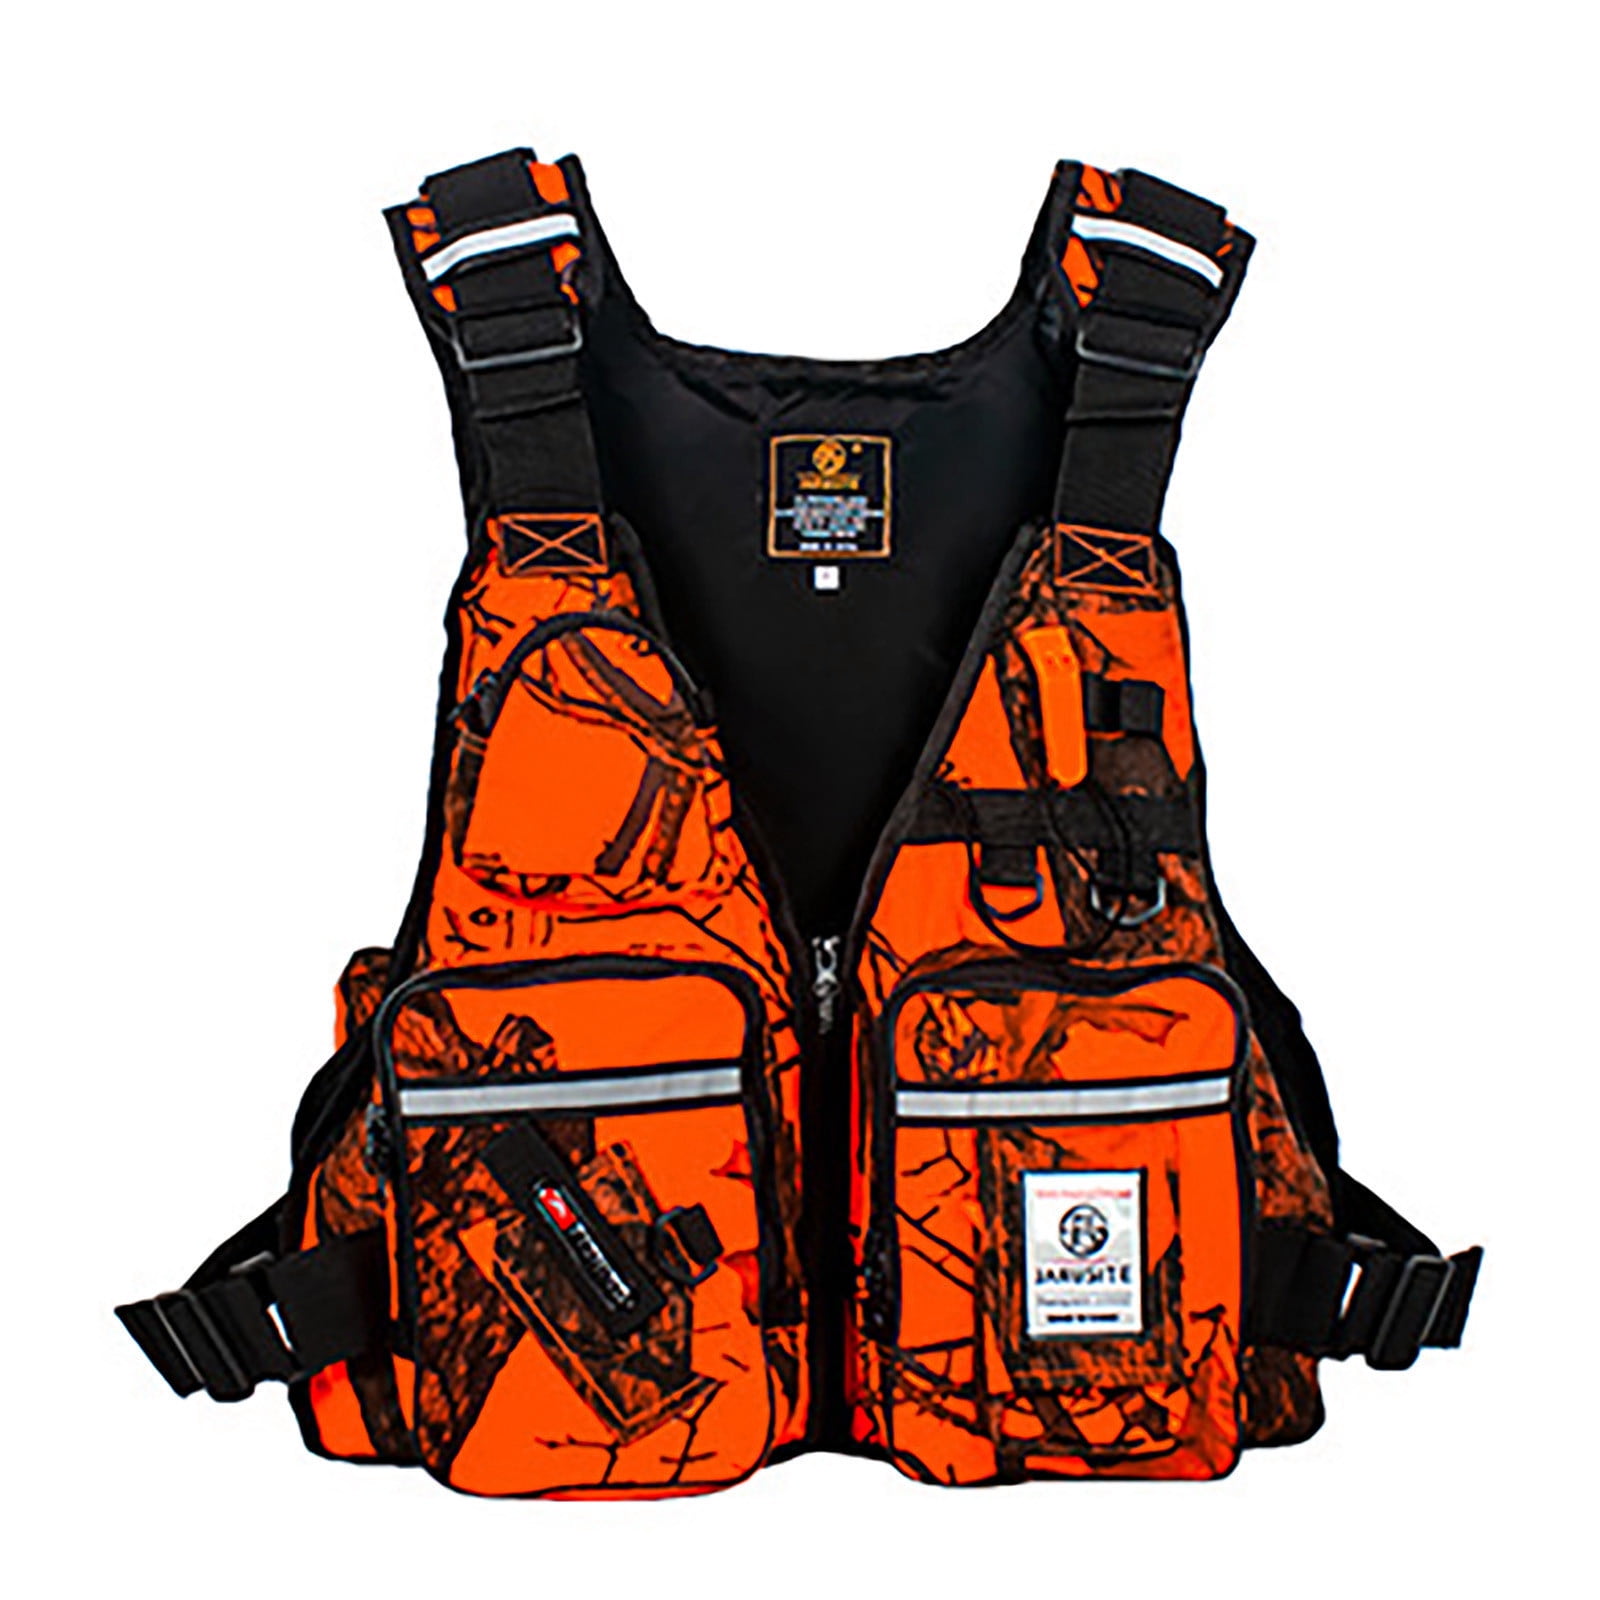 VBVC Multi-Pocket Adult Life Jacket For Outdoor Fishing,Rowing Sports Vest